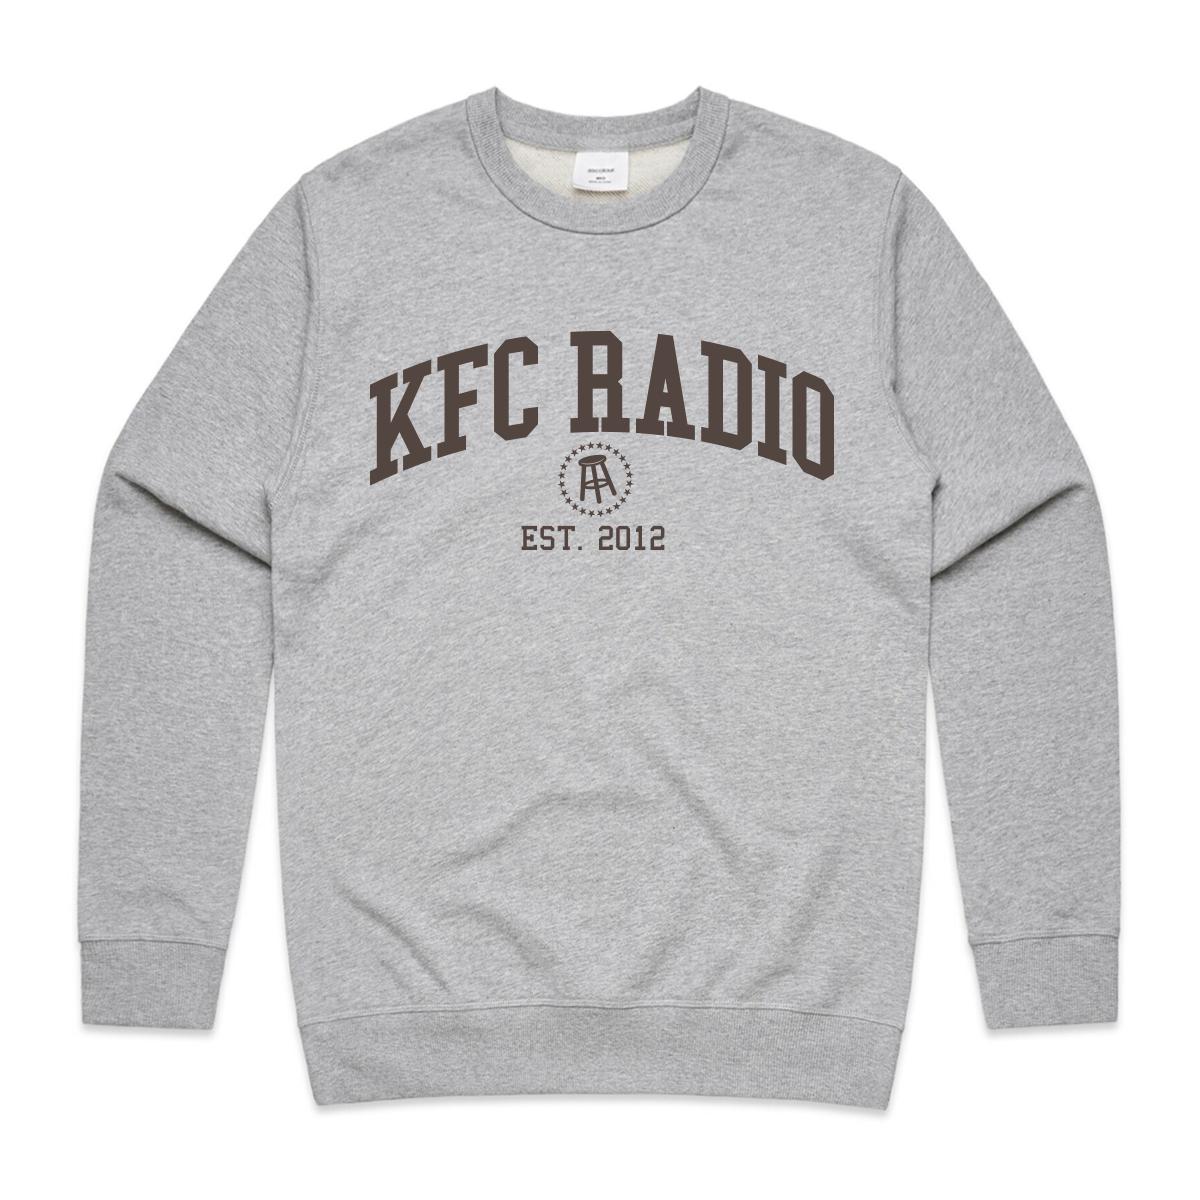 KFC Radio Logo Crewneck-Crewnecks-KFC Radio-Grey-S-Barstool Sports